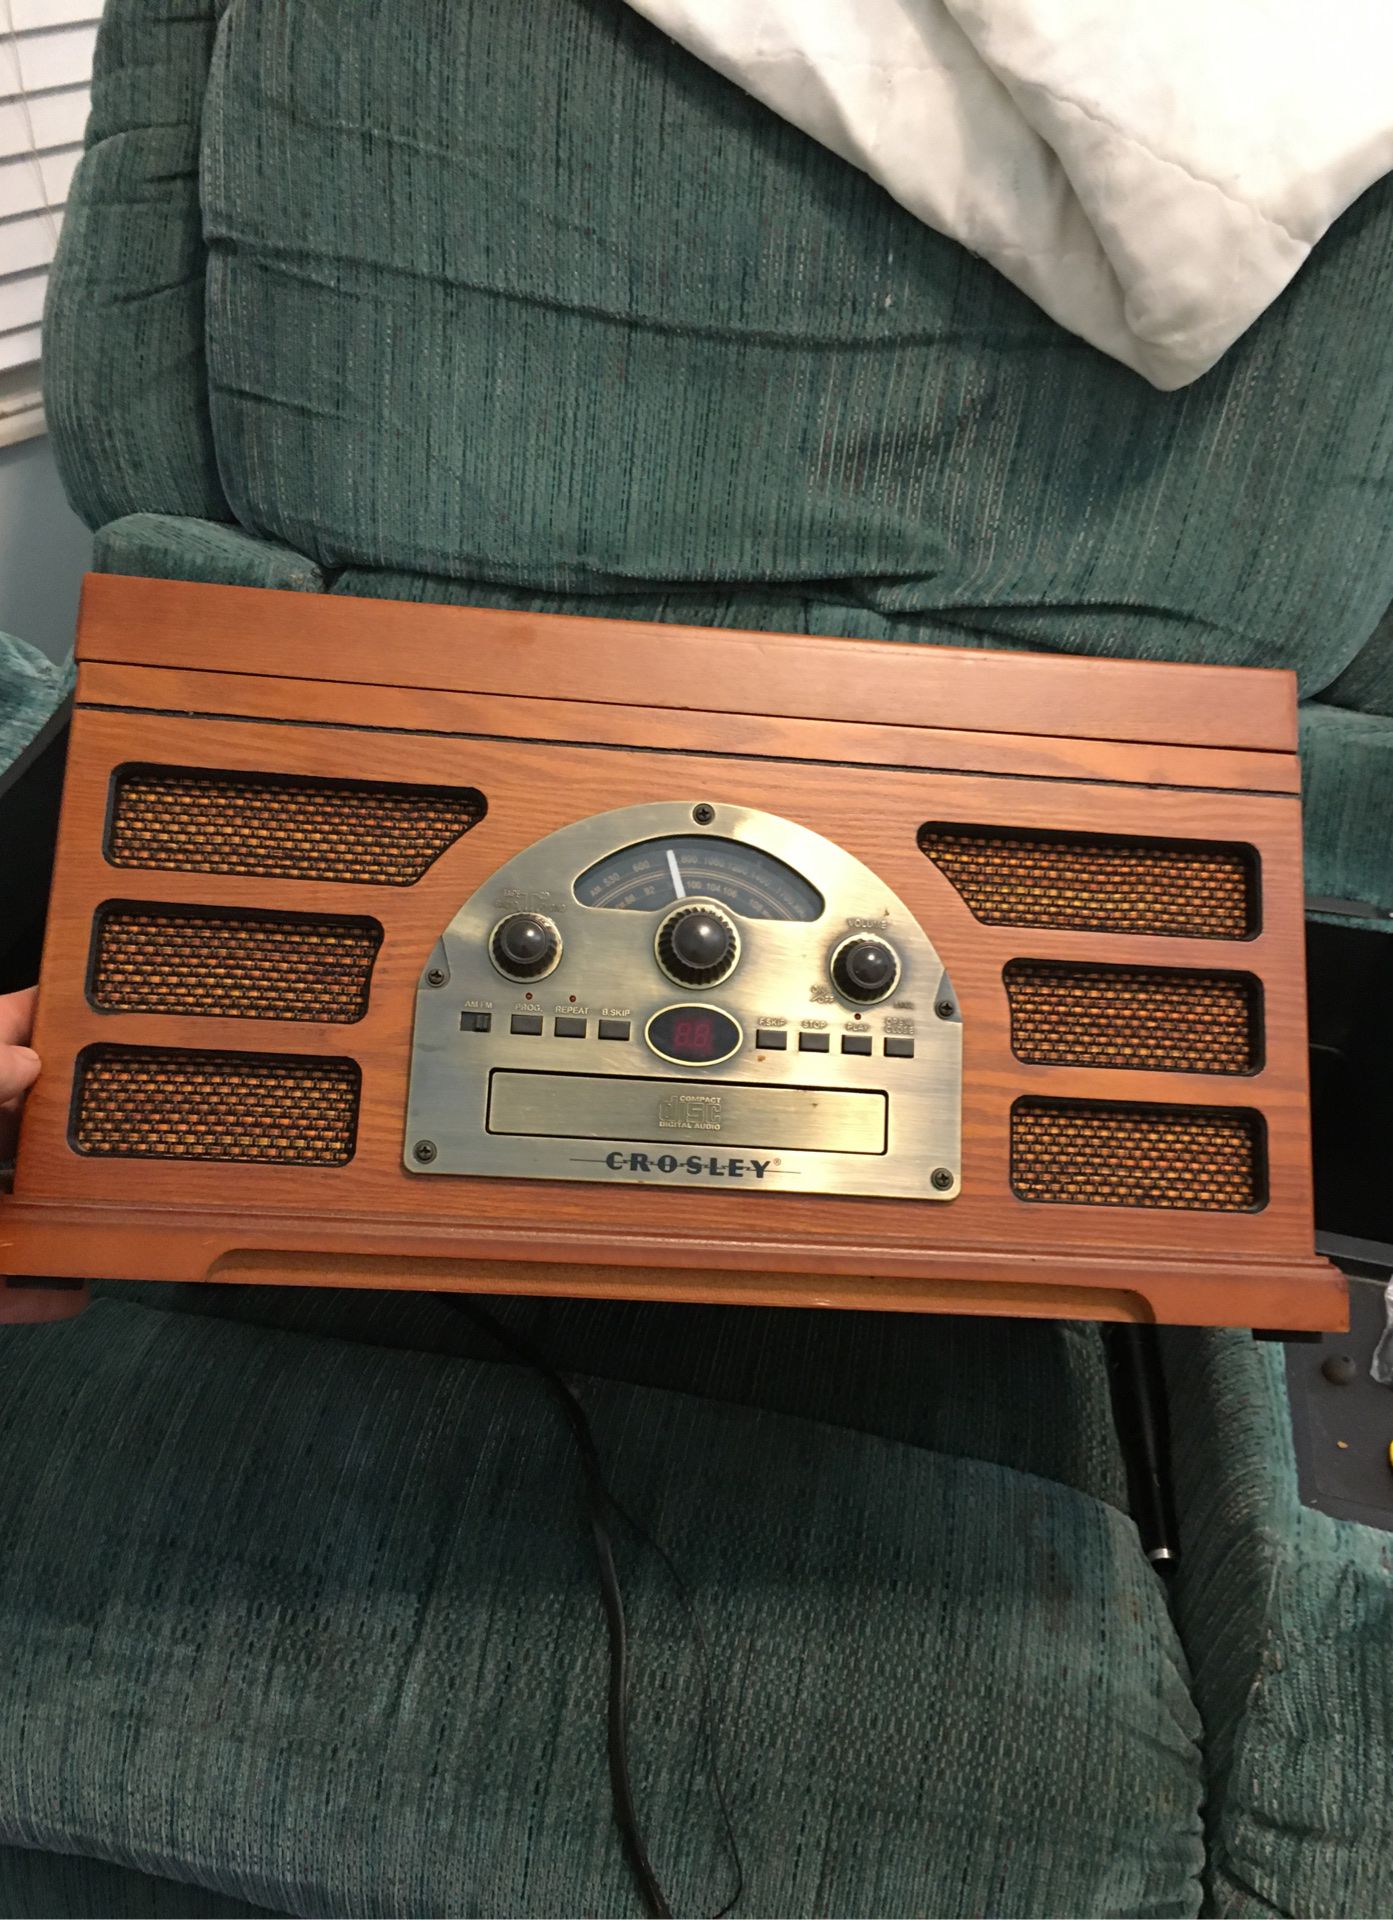 Crosley vintage record player/ CD player/ am fm radio